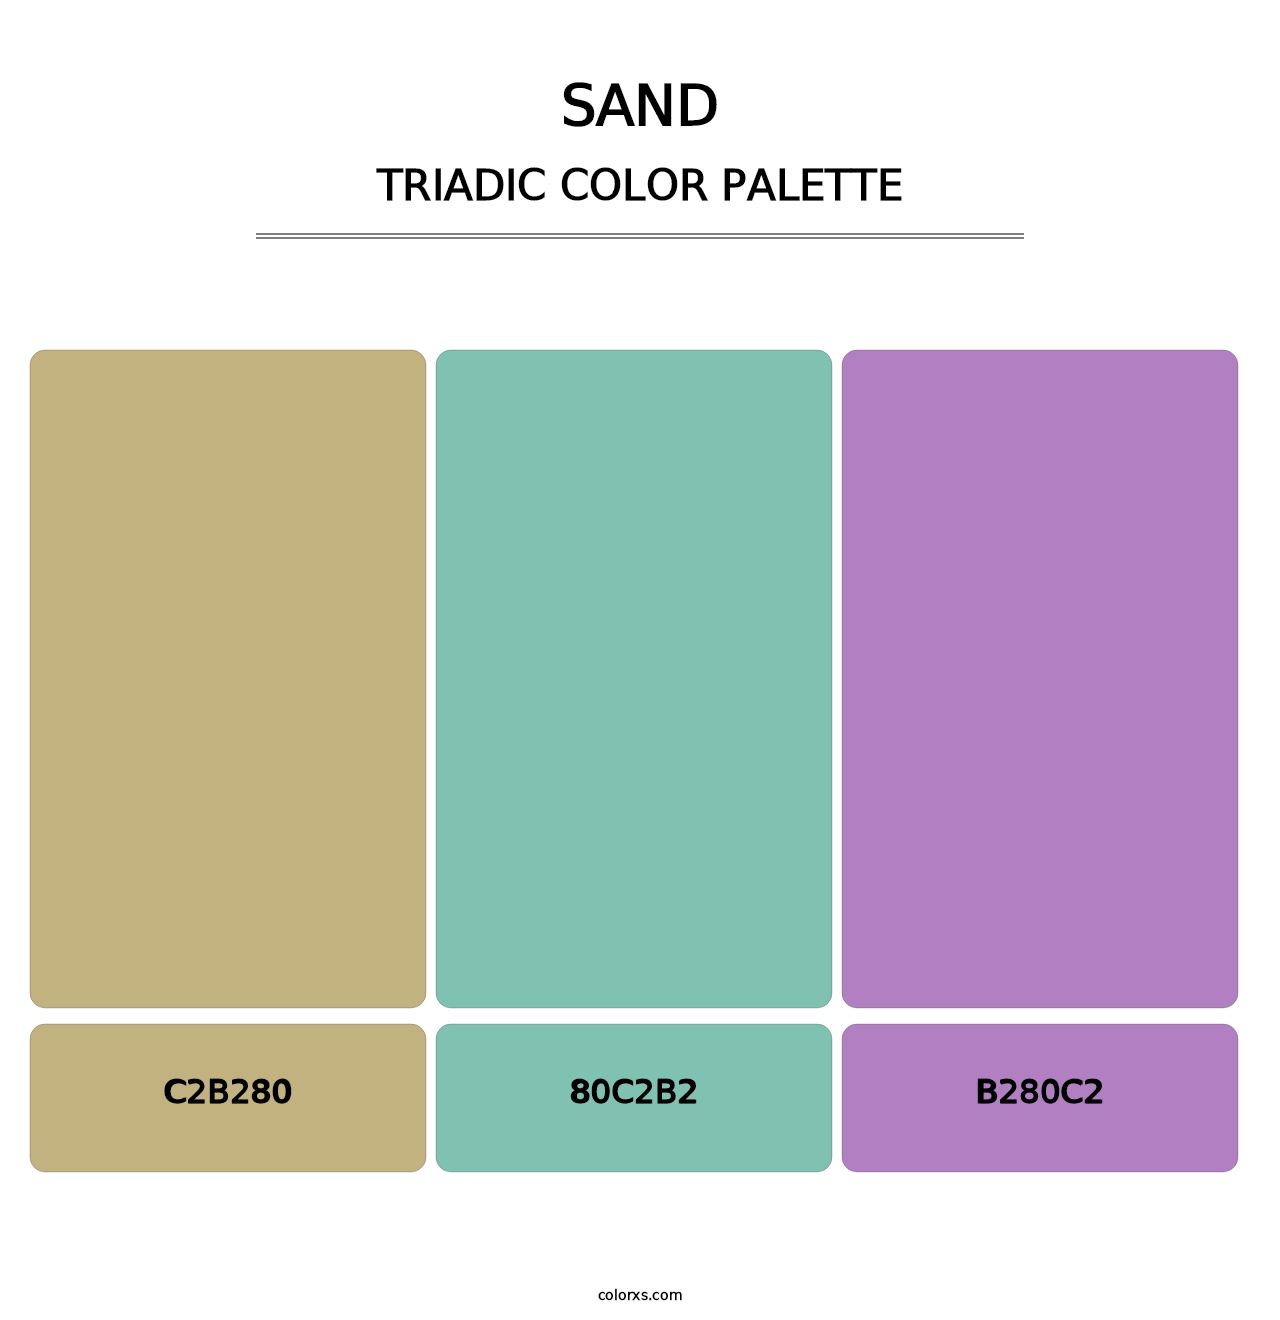 Sand - Triadic Color Palette